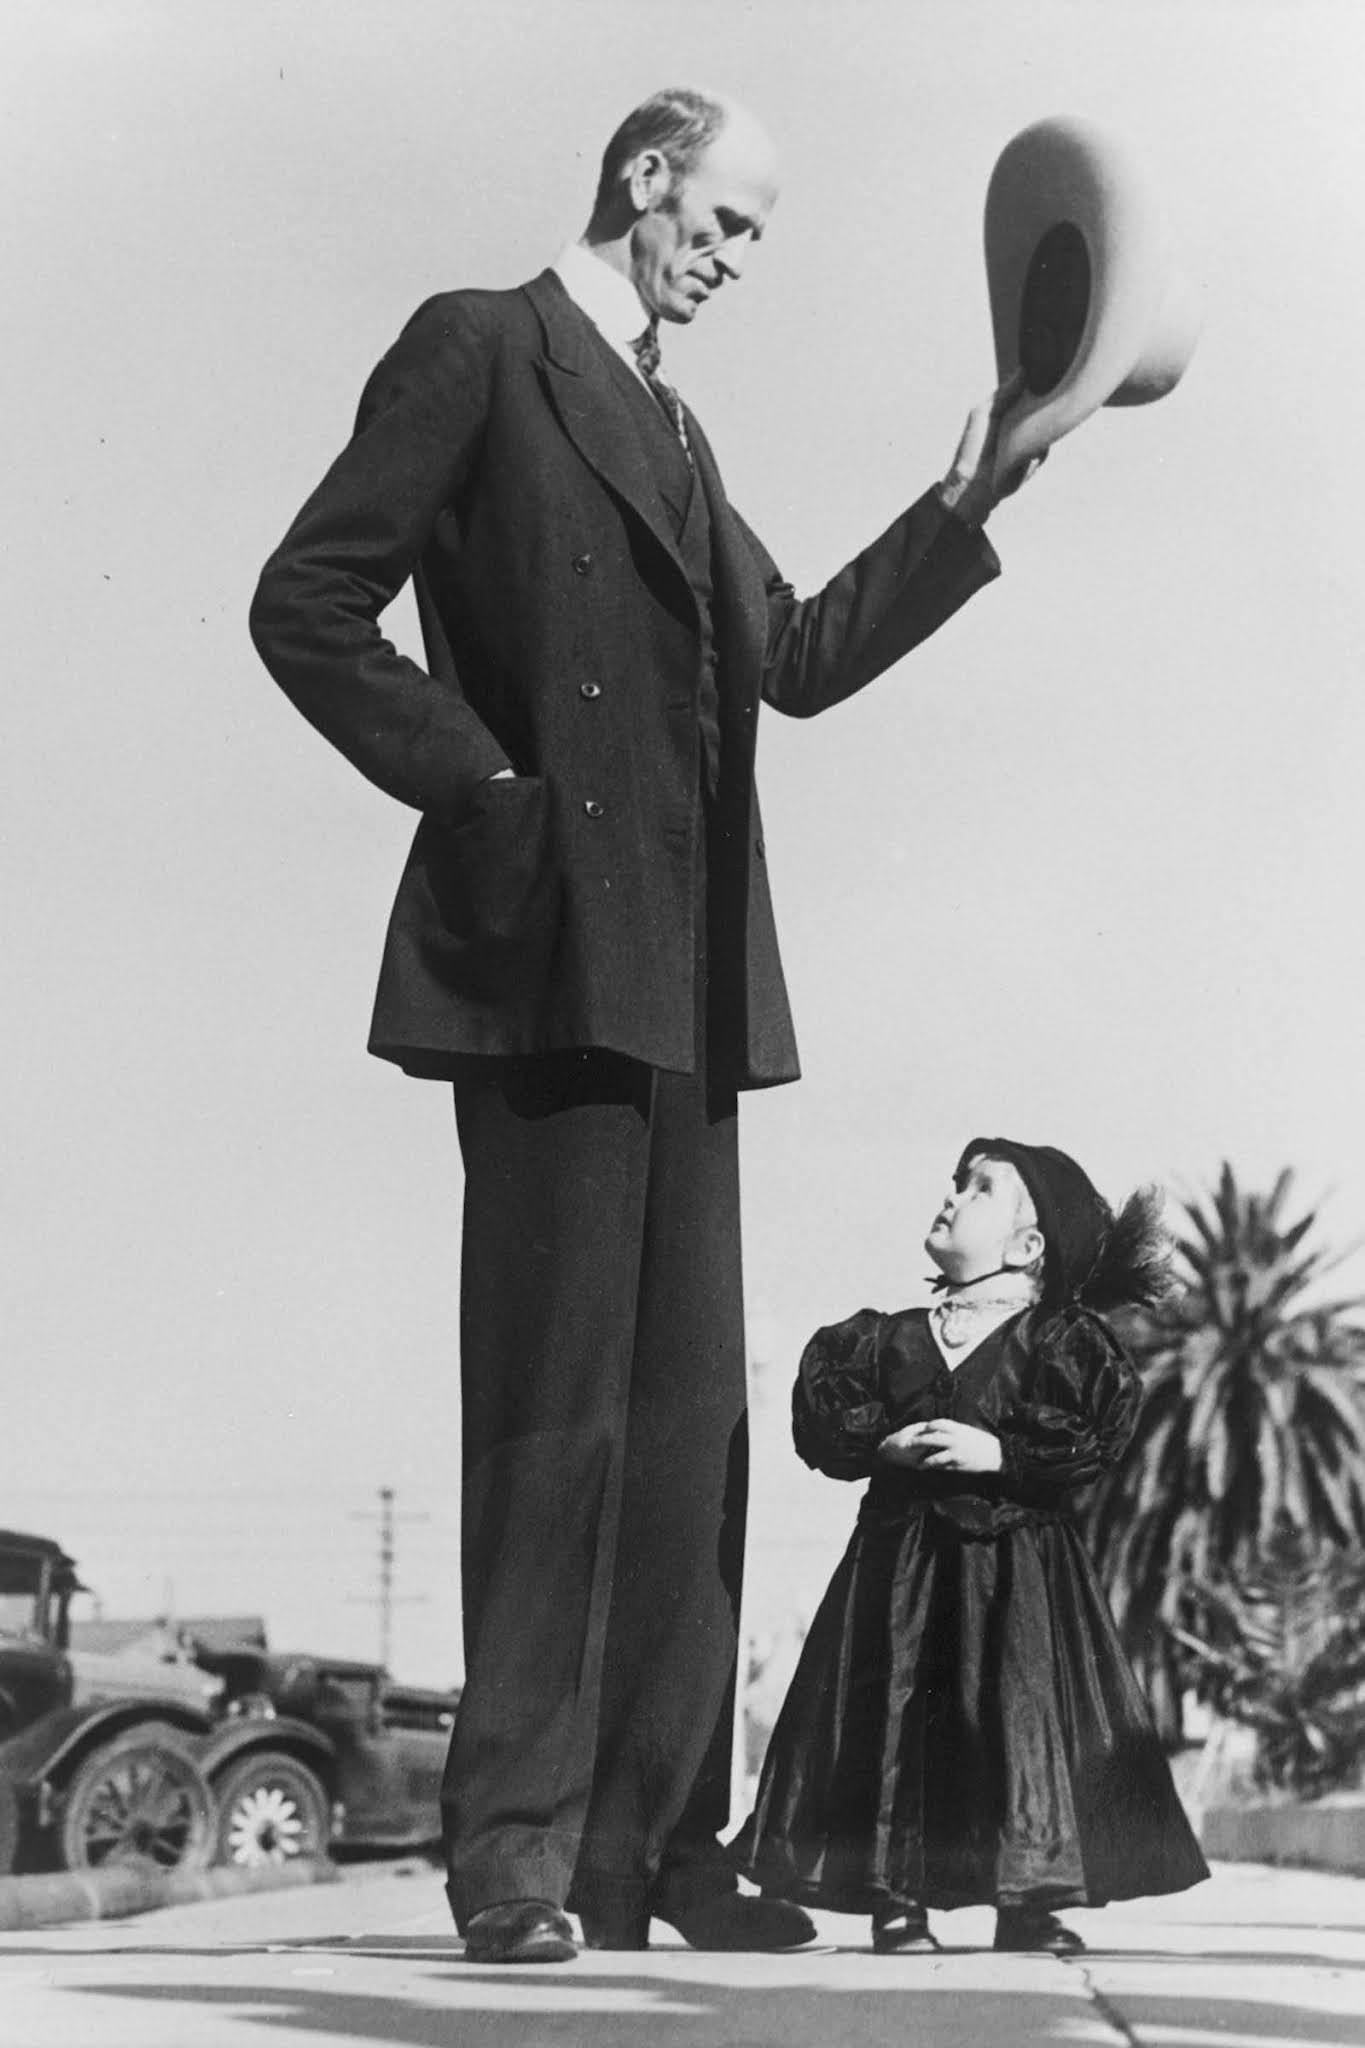 Madsen raises his hat on greeting Barbara Carlson, in Santa Monica, California. 1932.